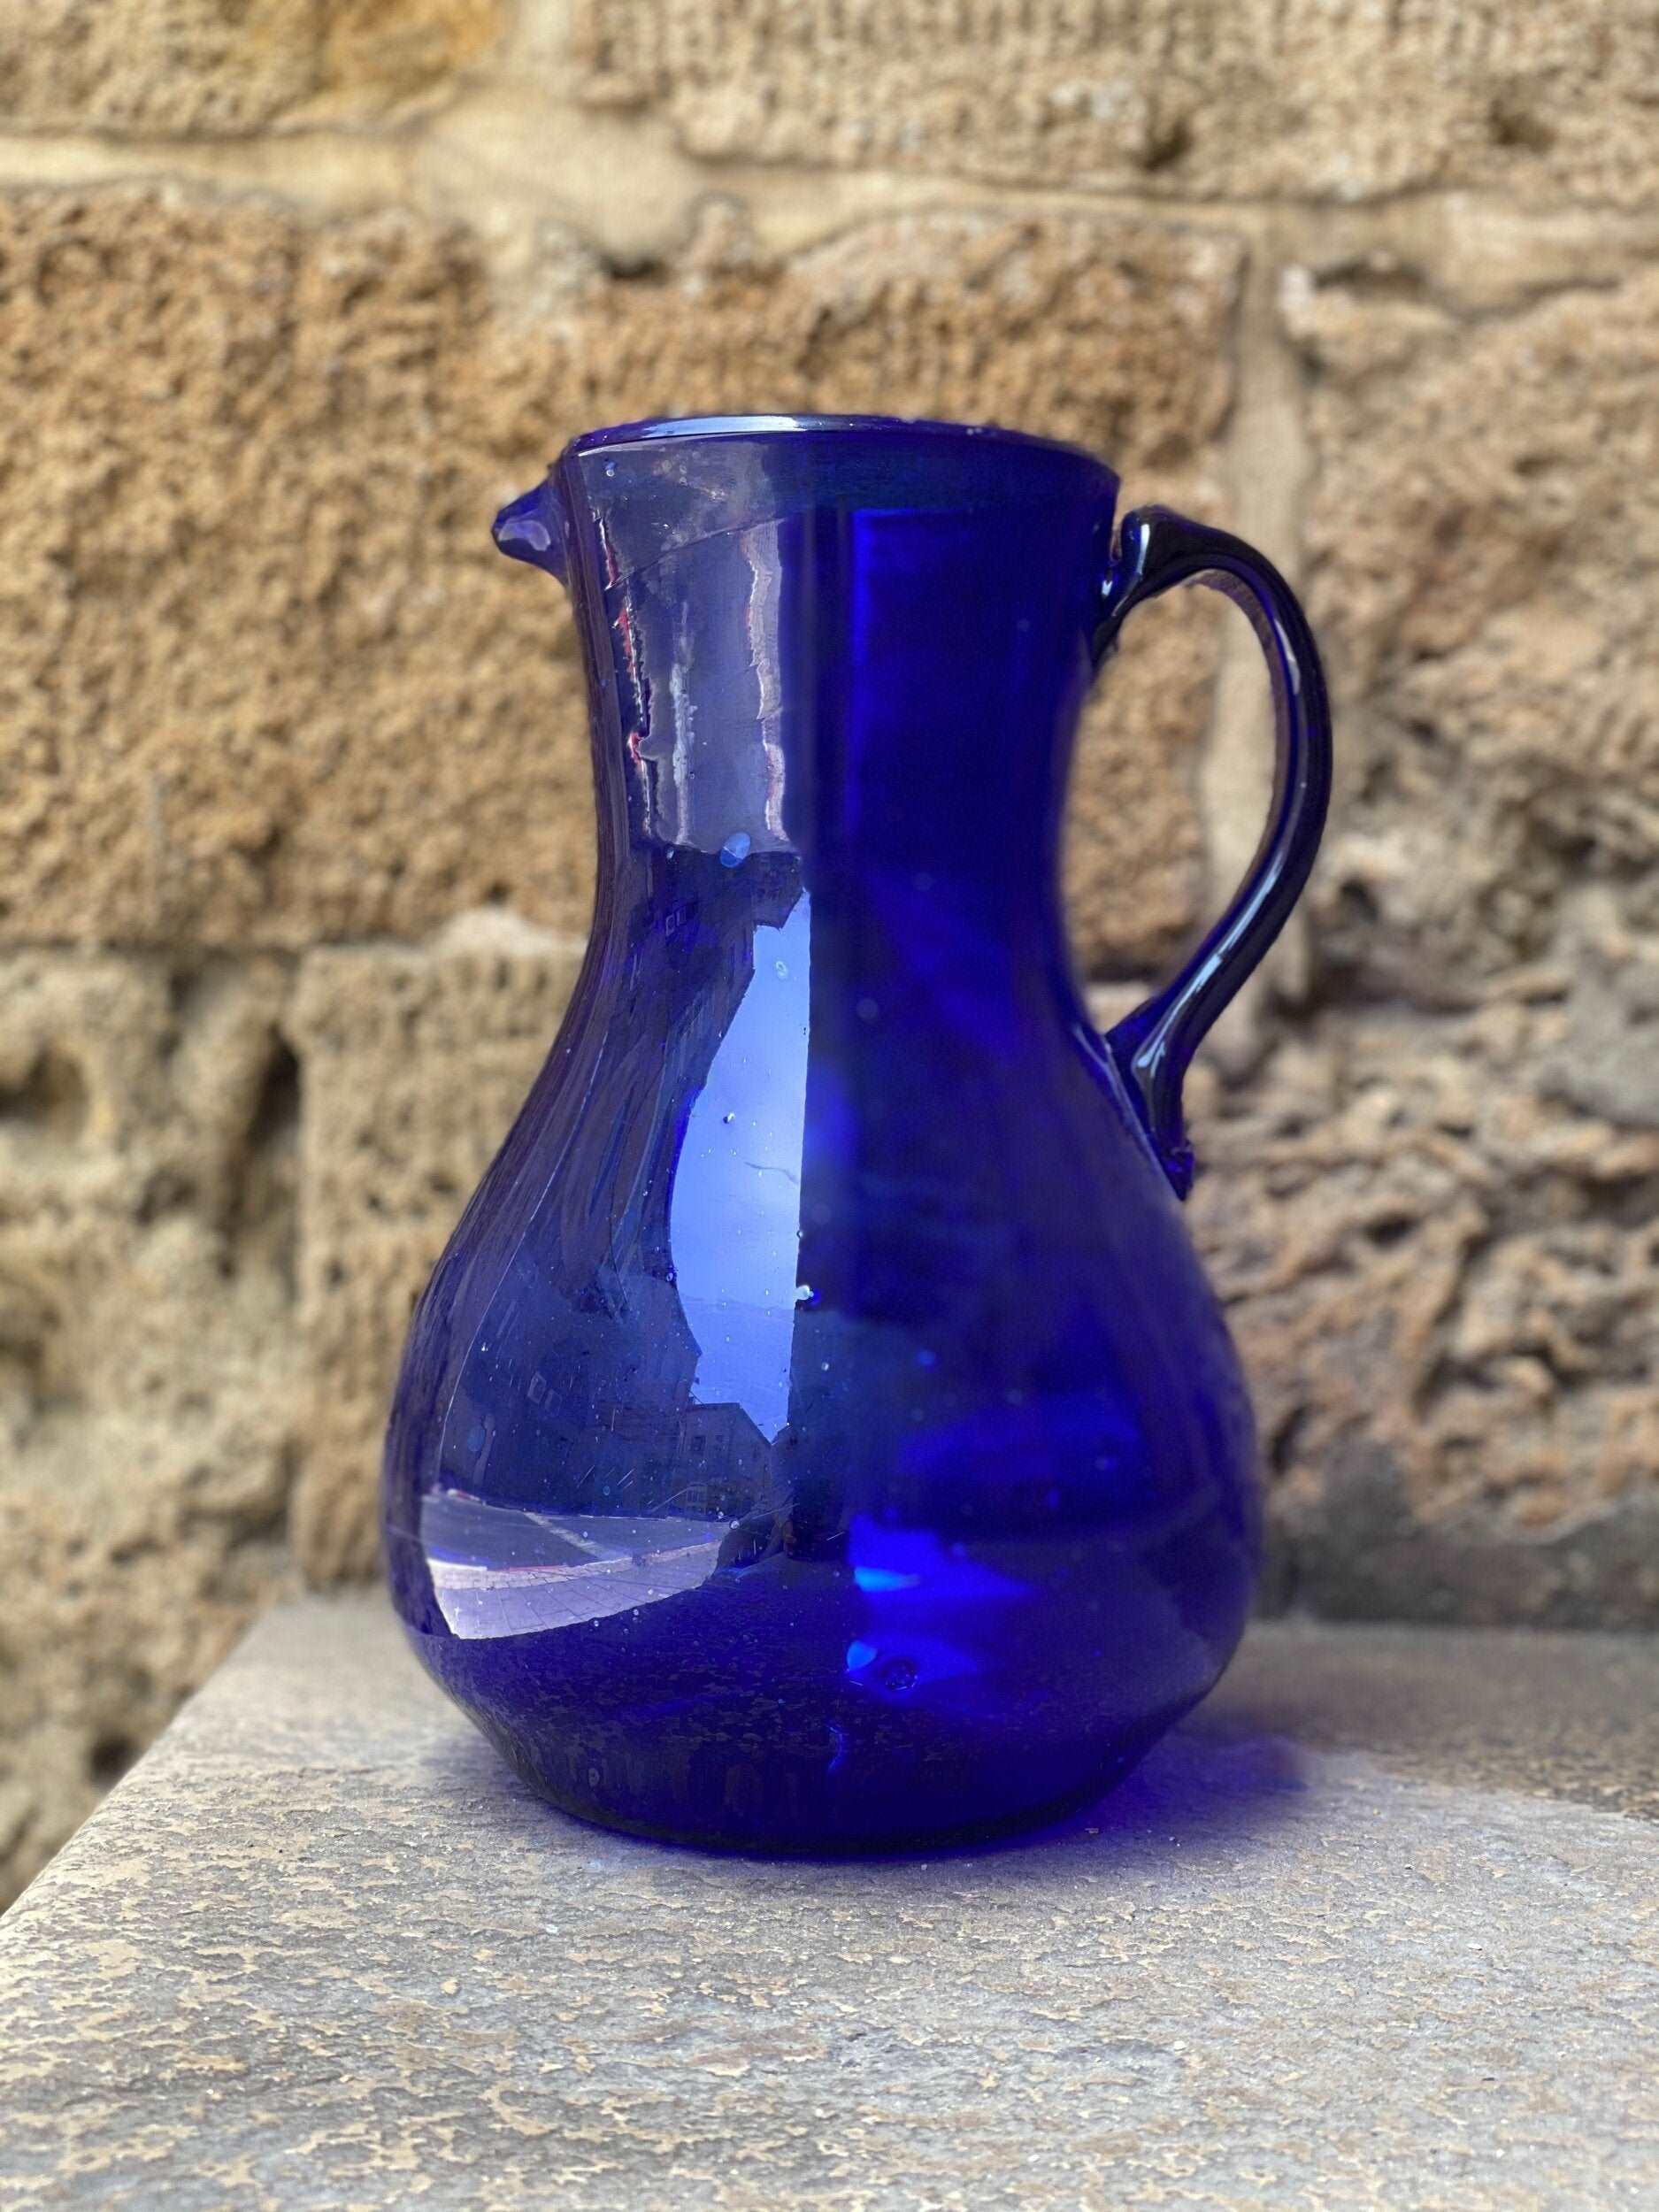 hebron-glass-pitcher-blue-jaffa-hilweh-market